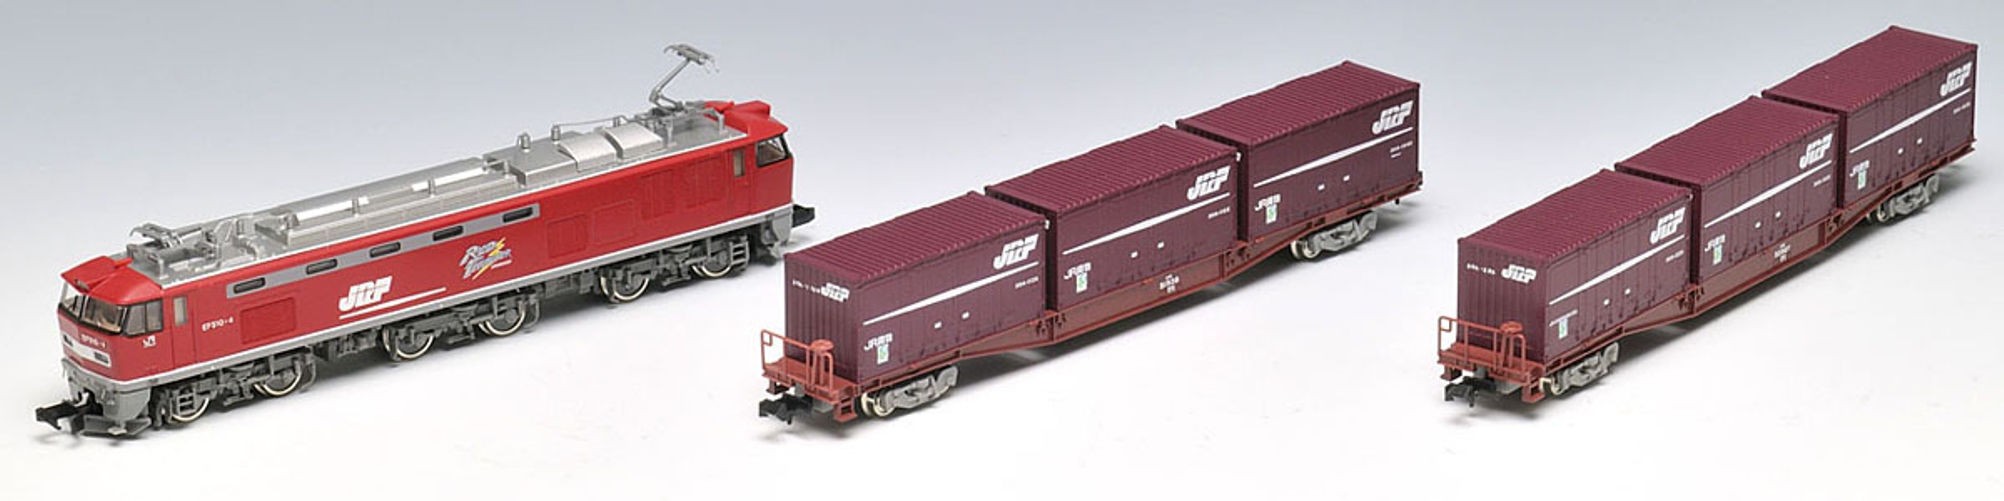 TOMIX - EF510 JR, Container Train Set, Escala N: 92417